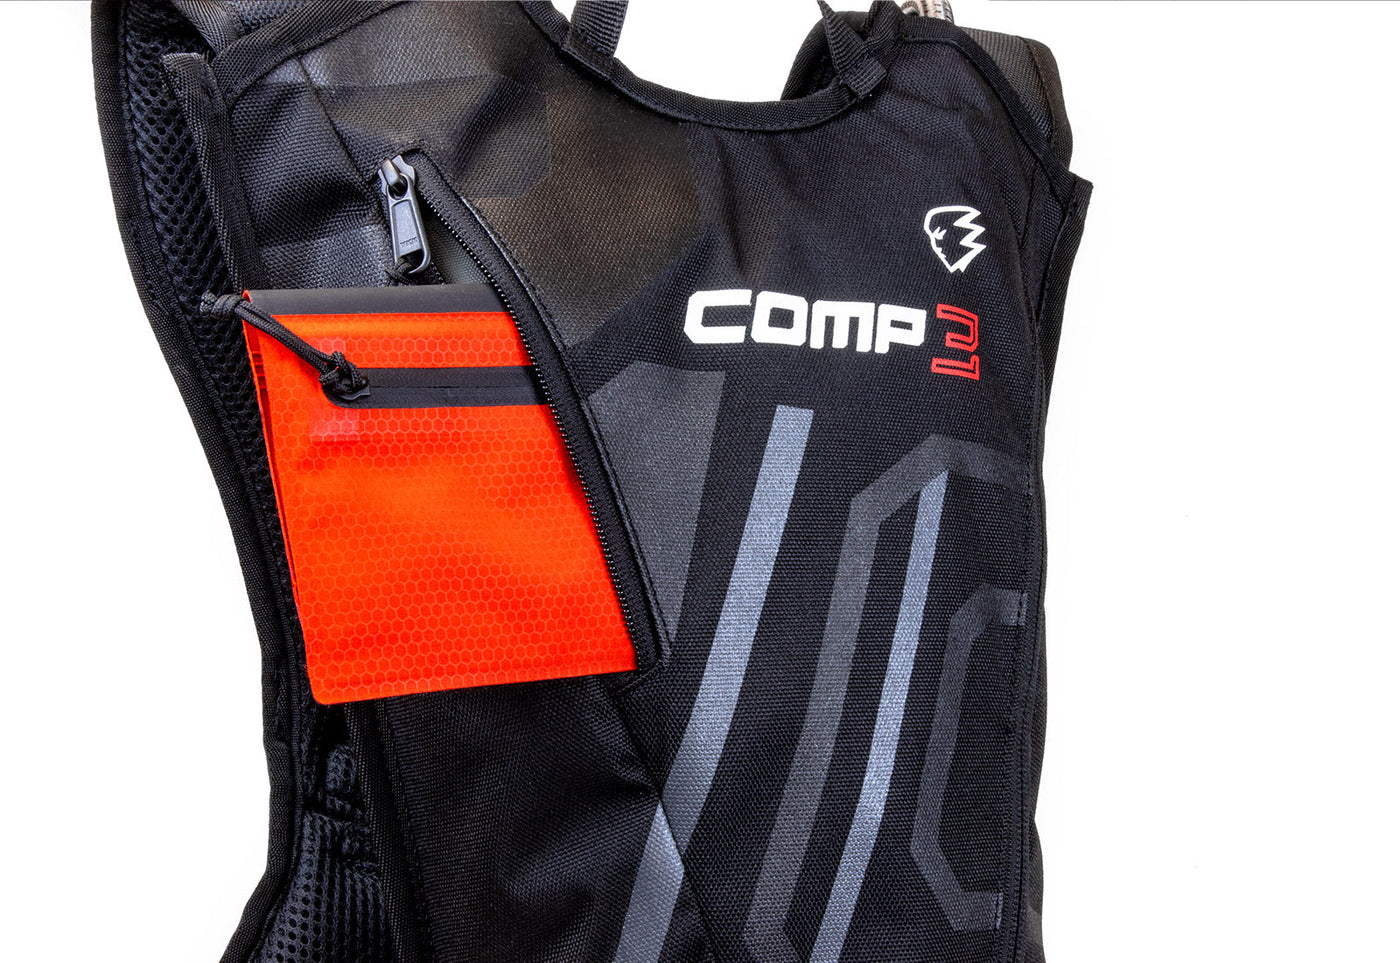 COMP 3 Backpack